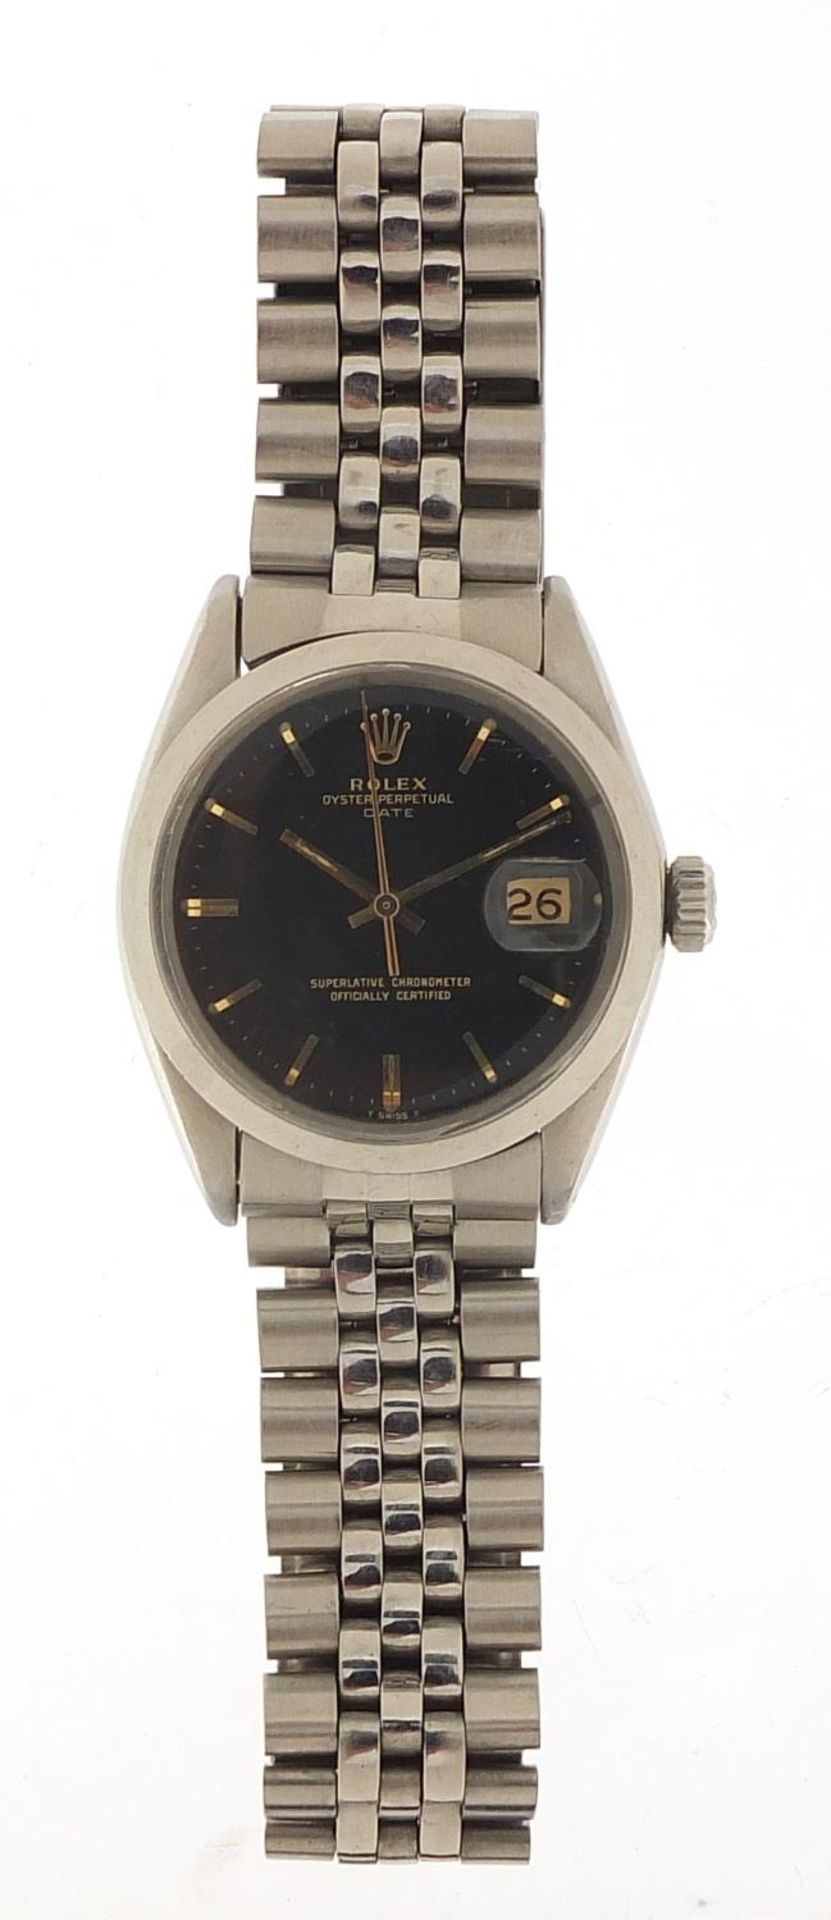 Rolex, gentlemen's Oysterdate Perpetual Date wristwatch, model 1500, serial number 2282229, 34mm - Image 2 of 5